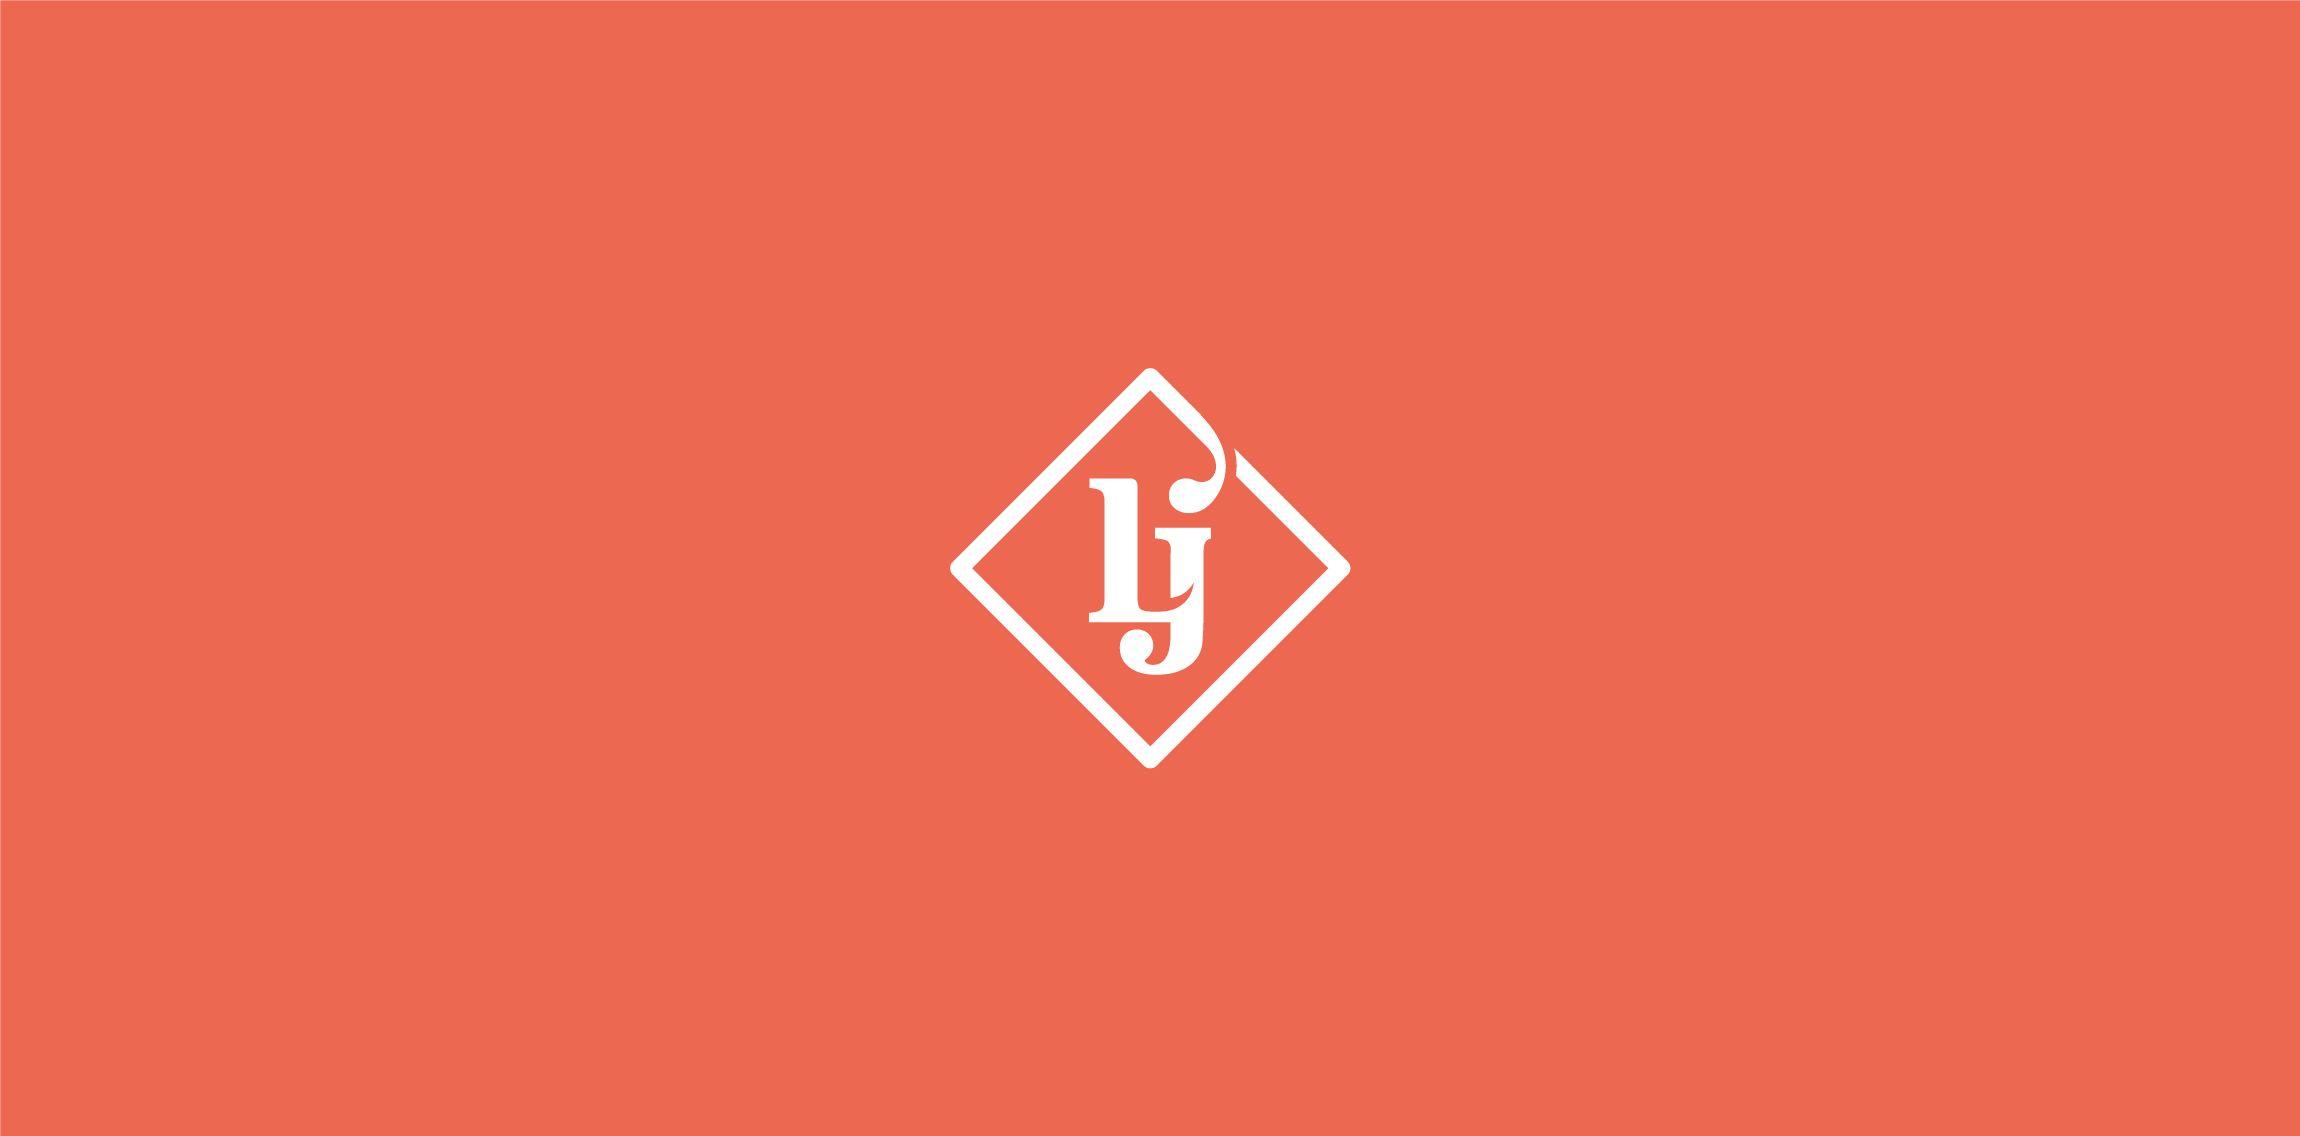 LJ Logo - LJ logo. Logos. Logo inspiration, Logos design, Diamond logo